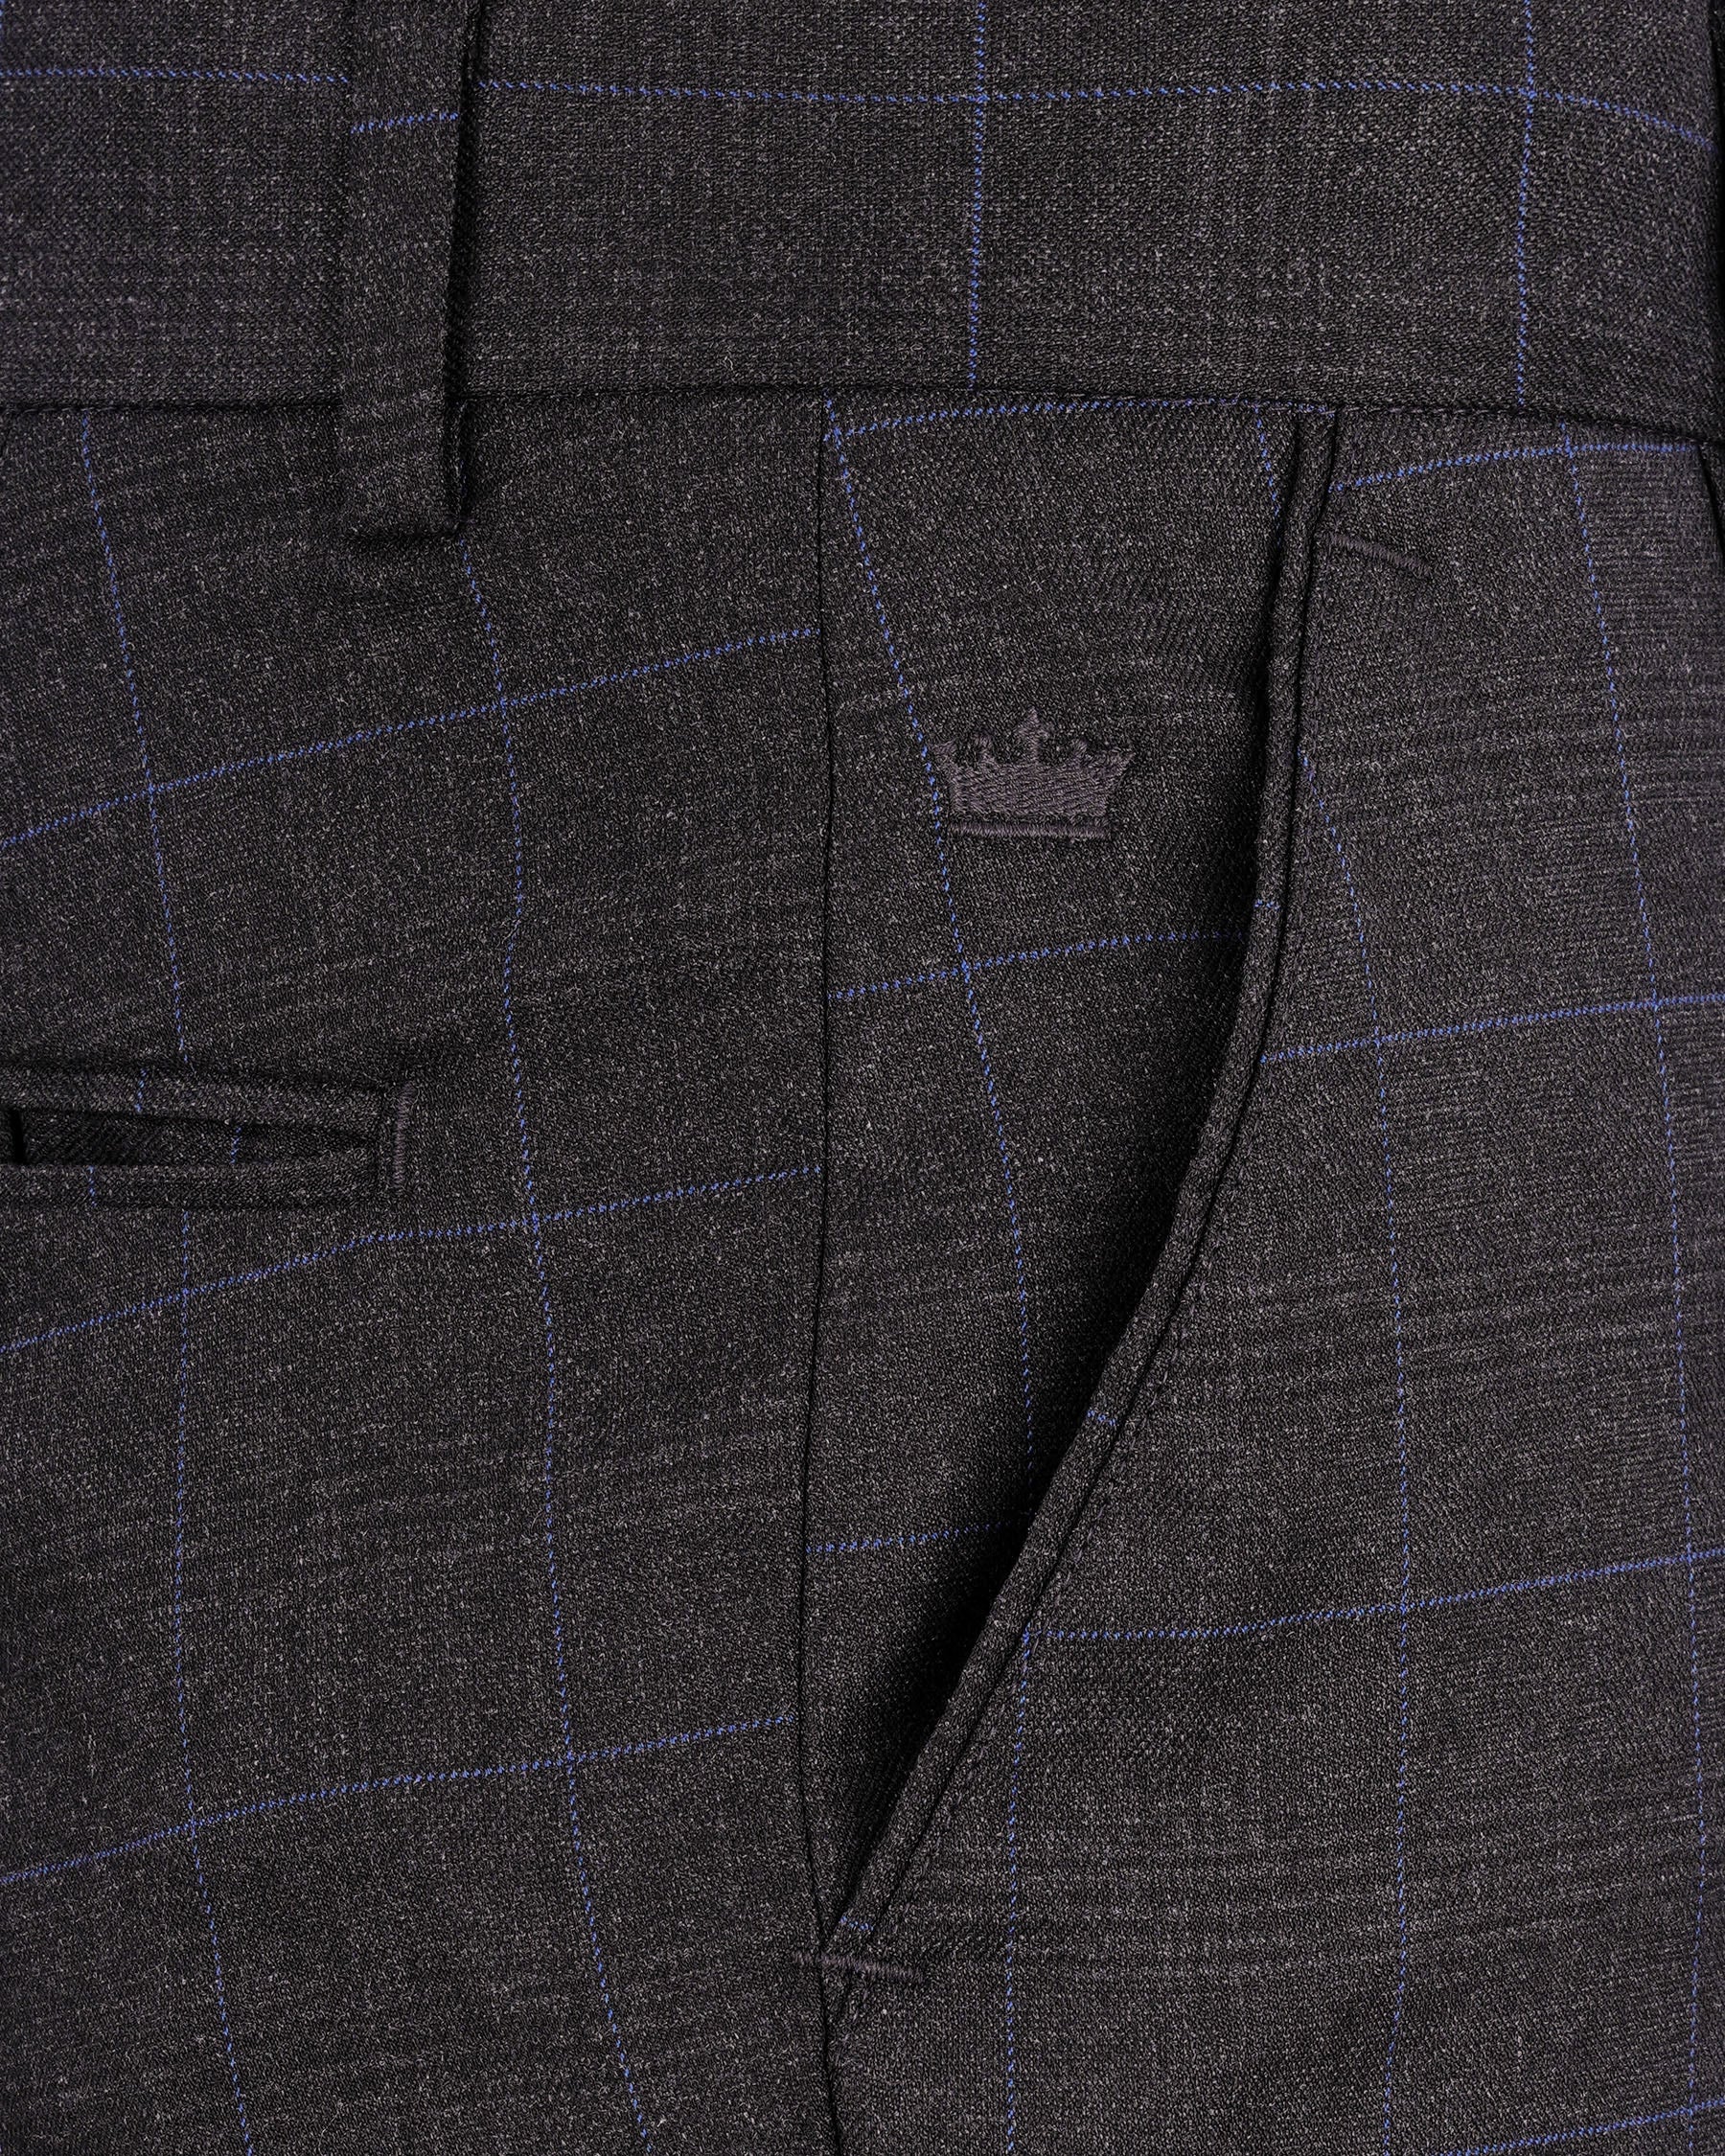 Eclipse Gray Windowpane Cross Placket Bandhgala Suit